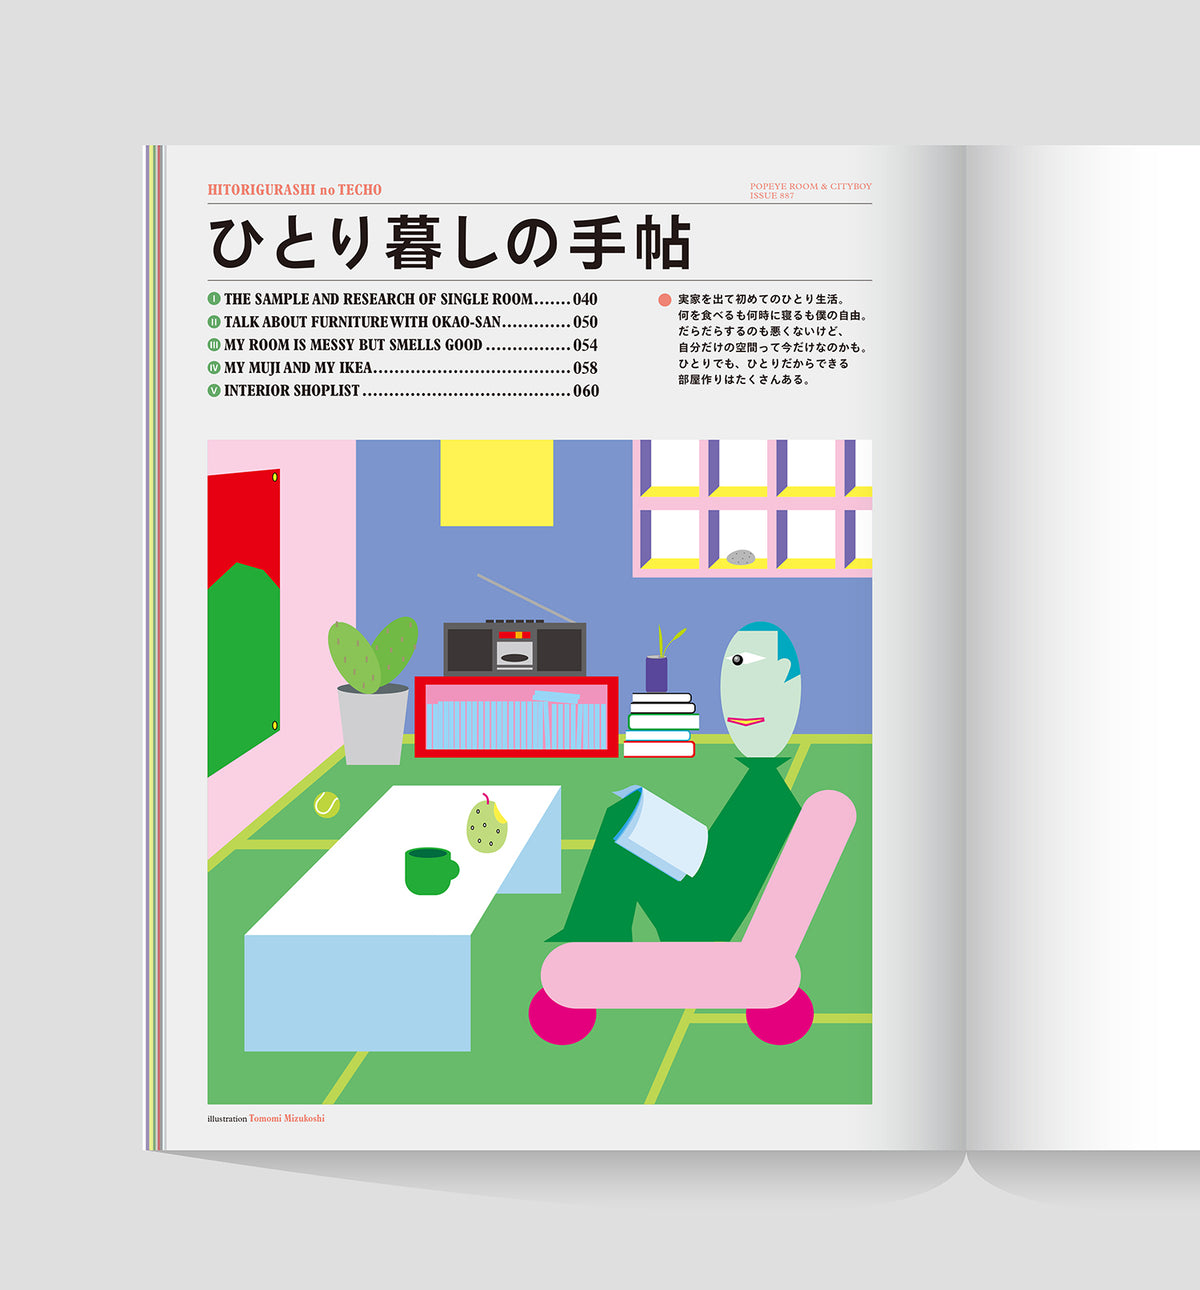 POPEYE Magazine Issue 887,Credits: Illustration,Year: 2021,Country: Japan,Client: MAGAZINE HOUSE,Art Director: Taro Kambe